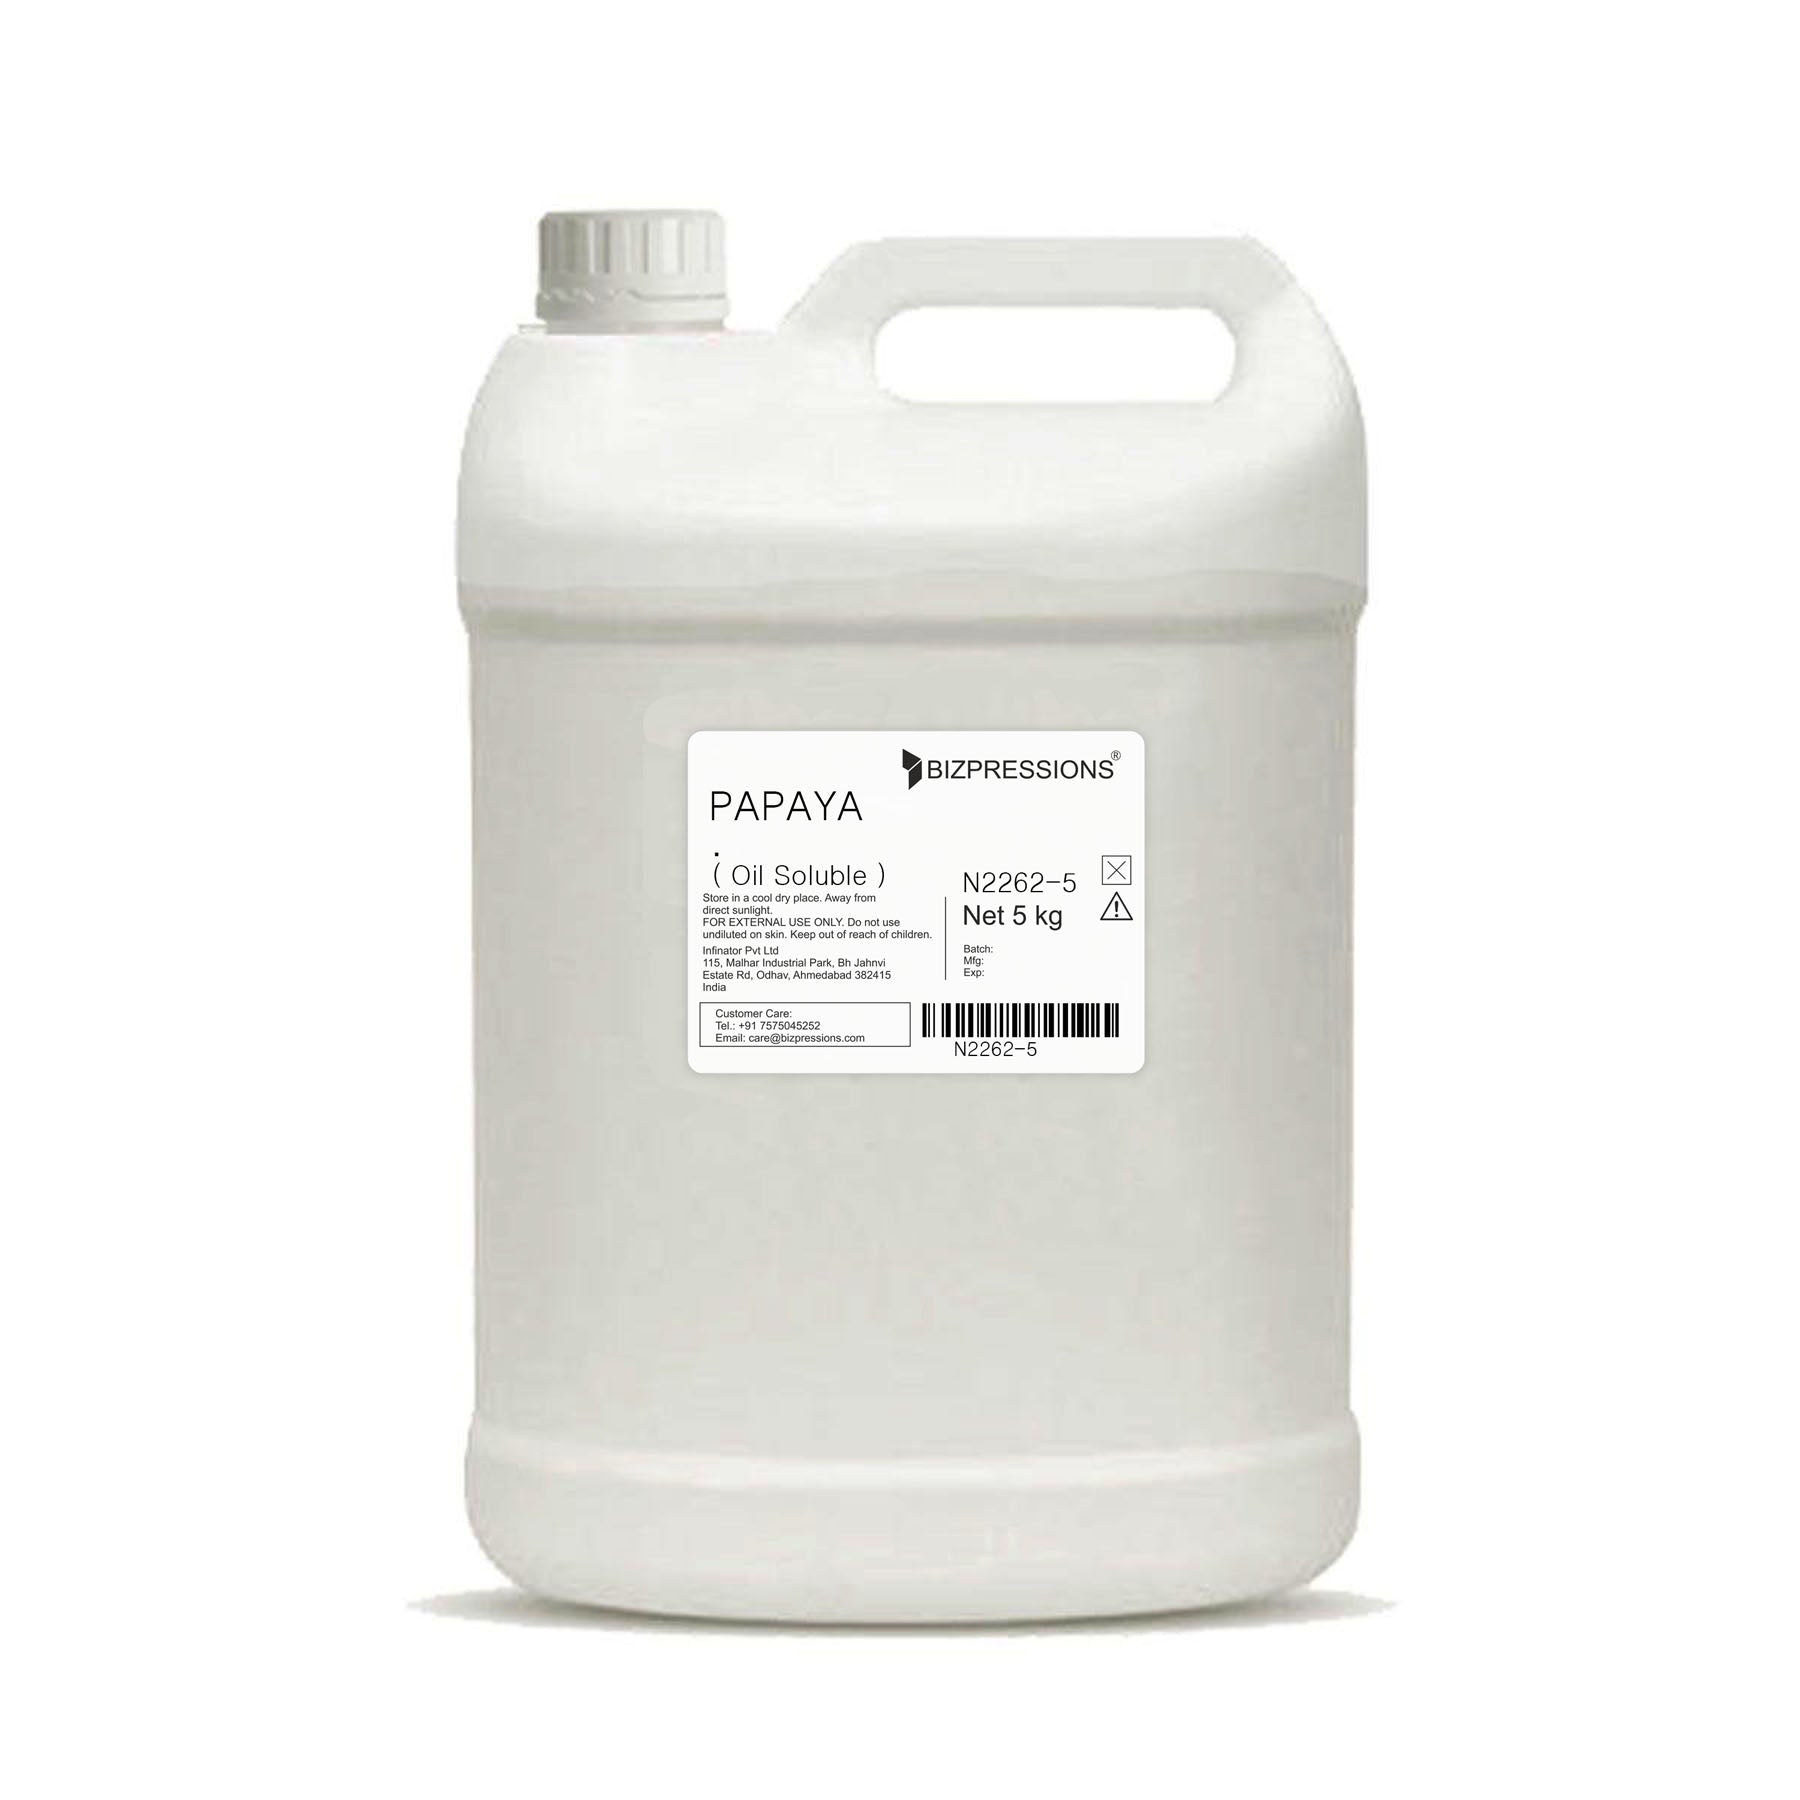 PAPAYA - Fragrance ( Oil Soluble ) - 5 kg